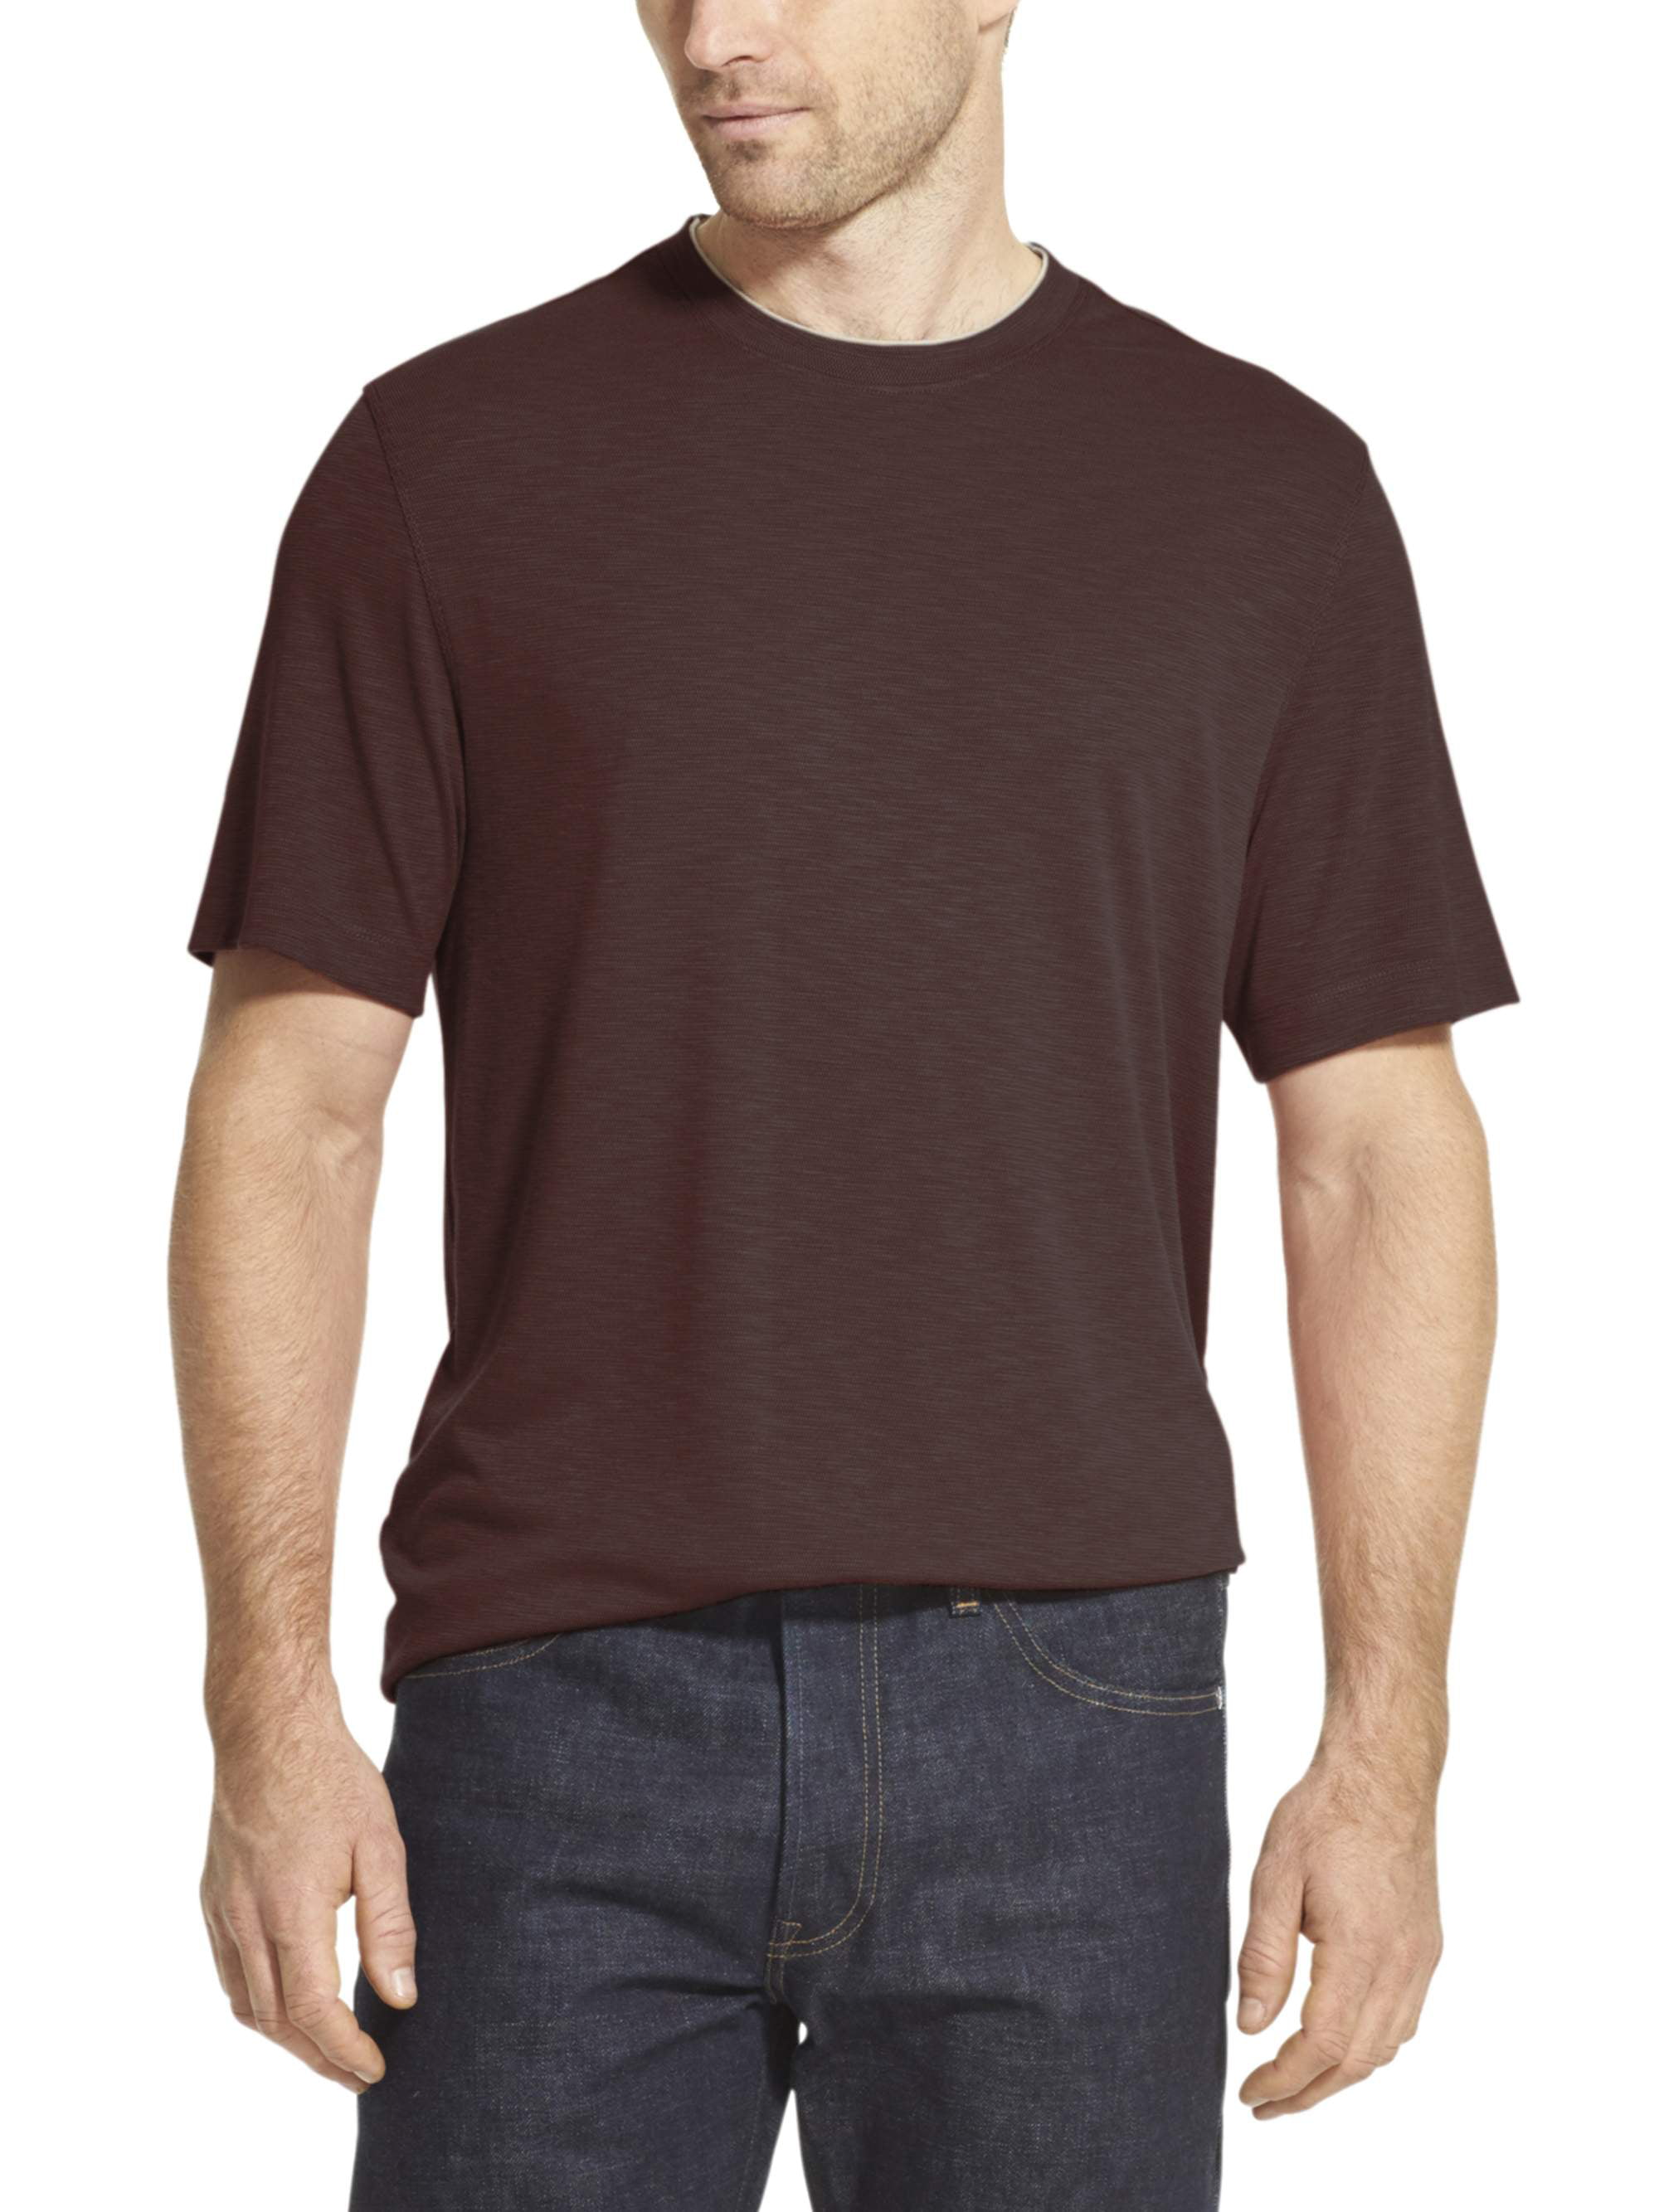 Van Heusen - Van Heusen Men's Big and Tall Air Short Sleeve T-Shirt ...